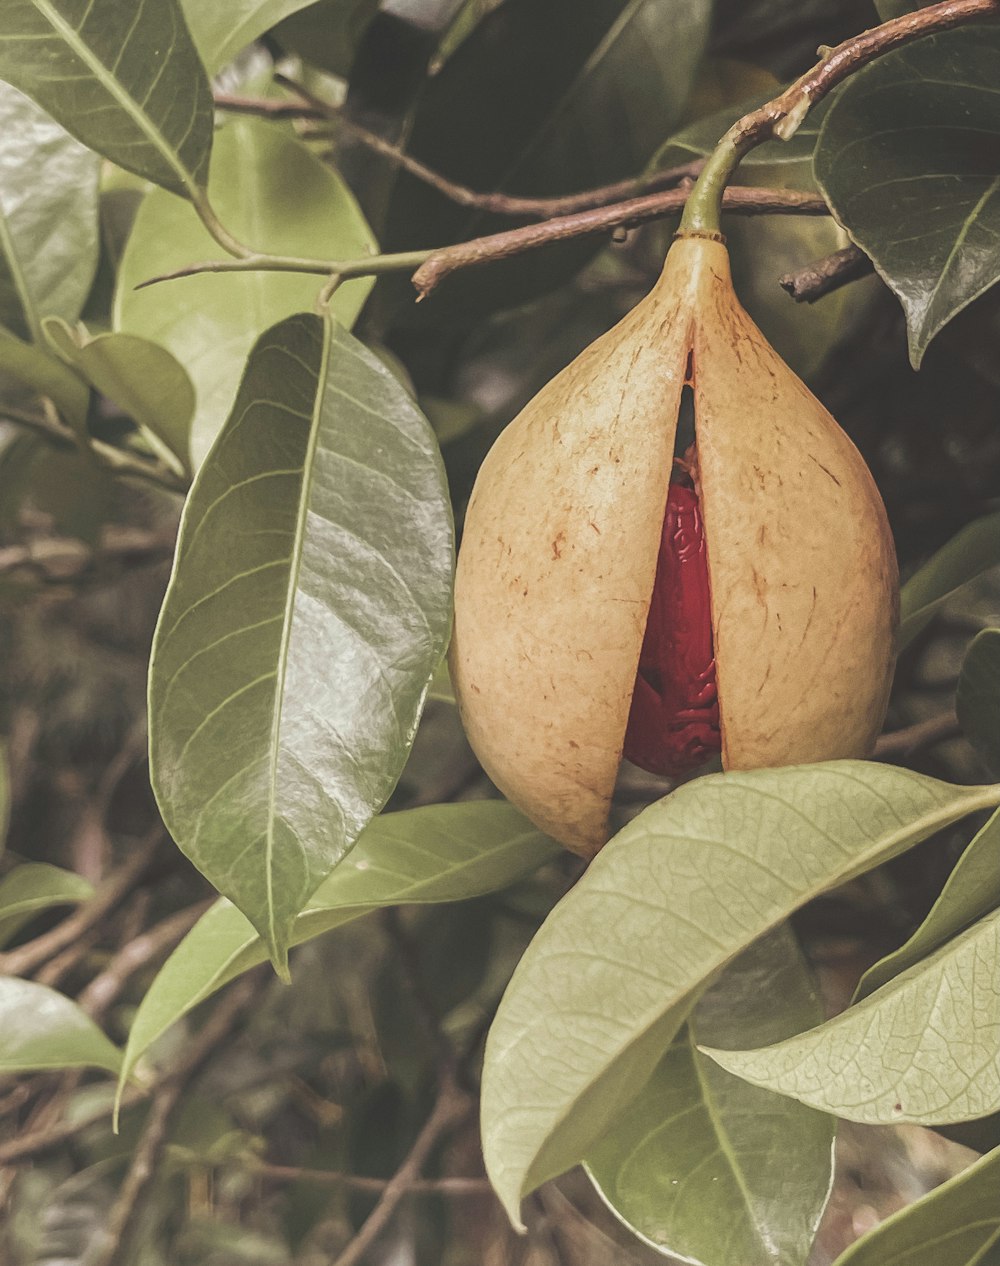 a close up of a nut on a tree